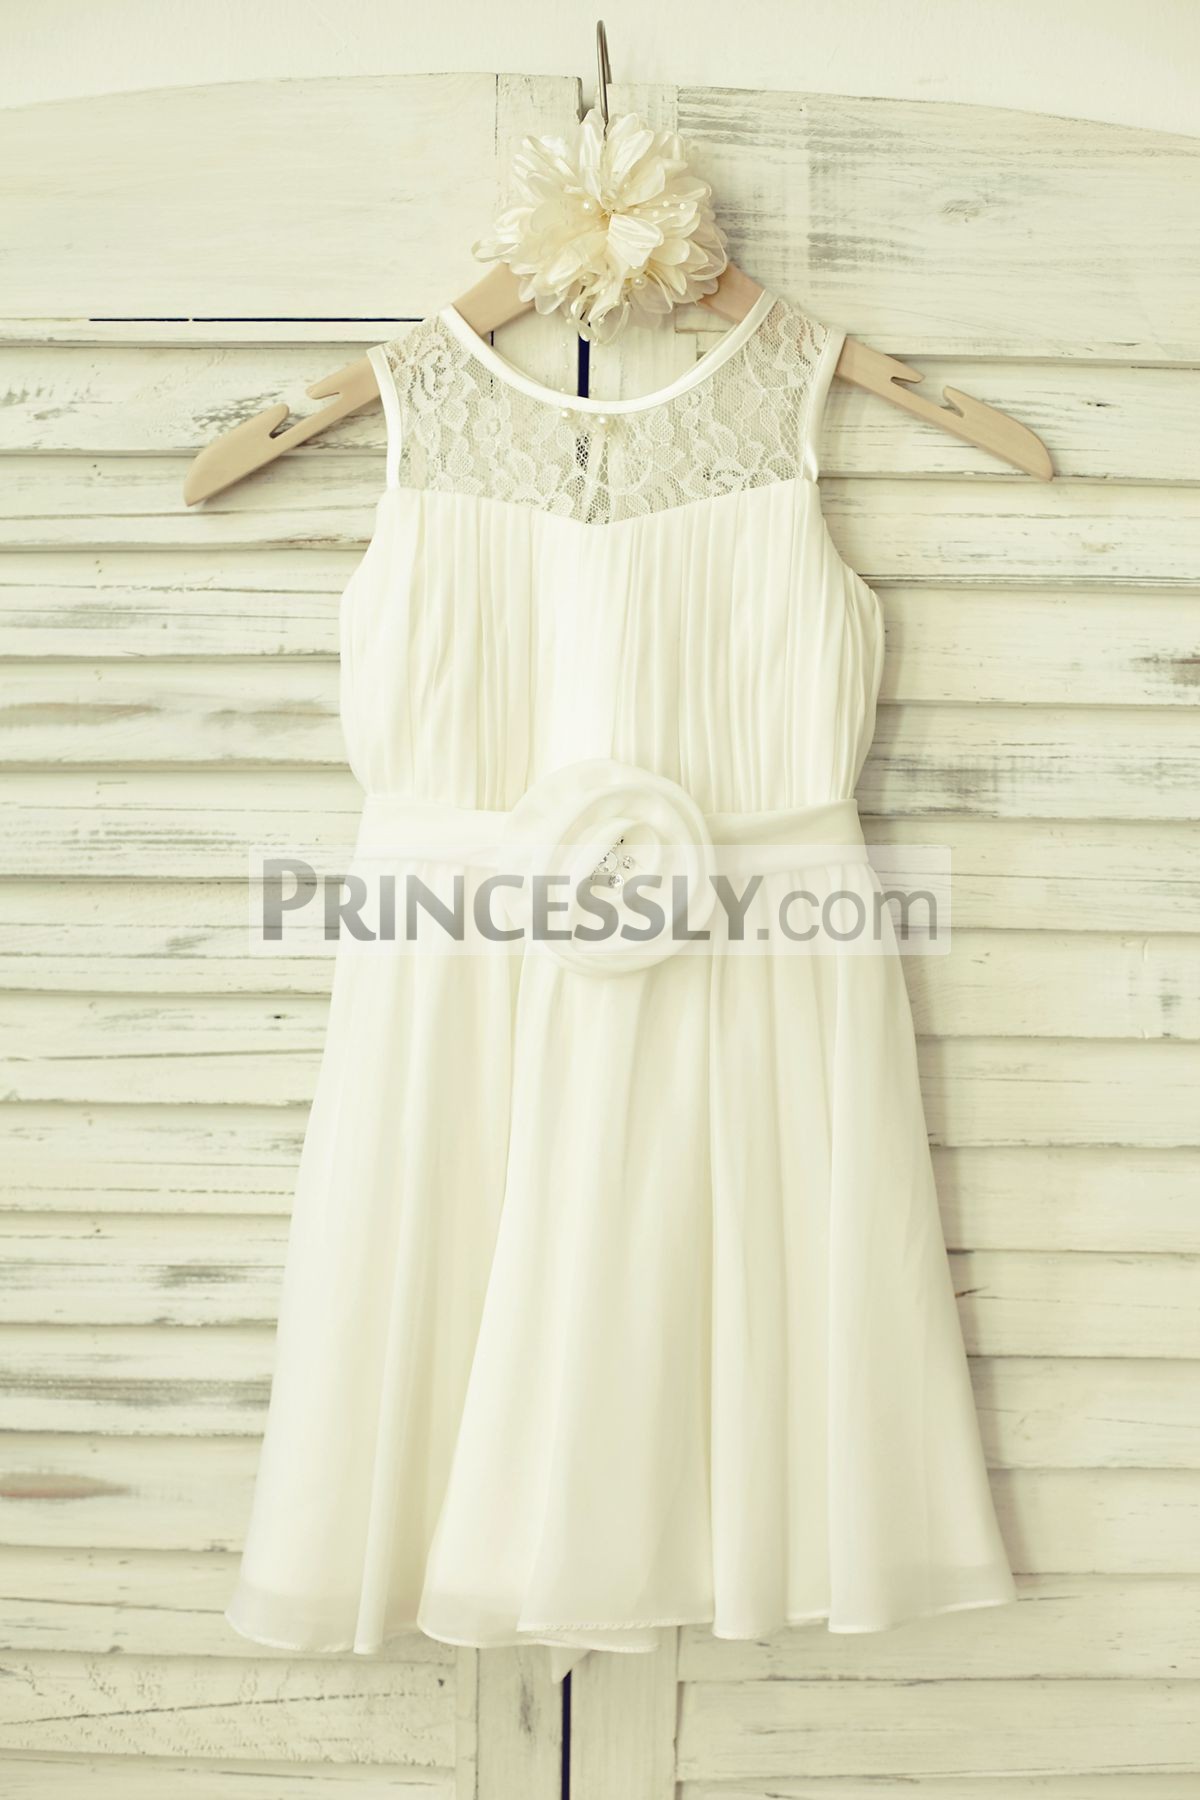 Sheer lace ivory chiffon wedding baby girl dress